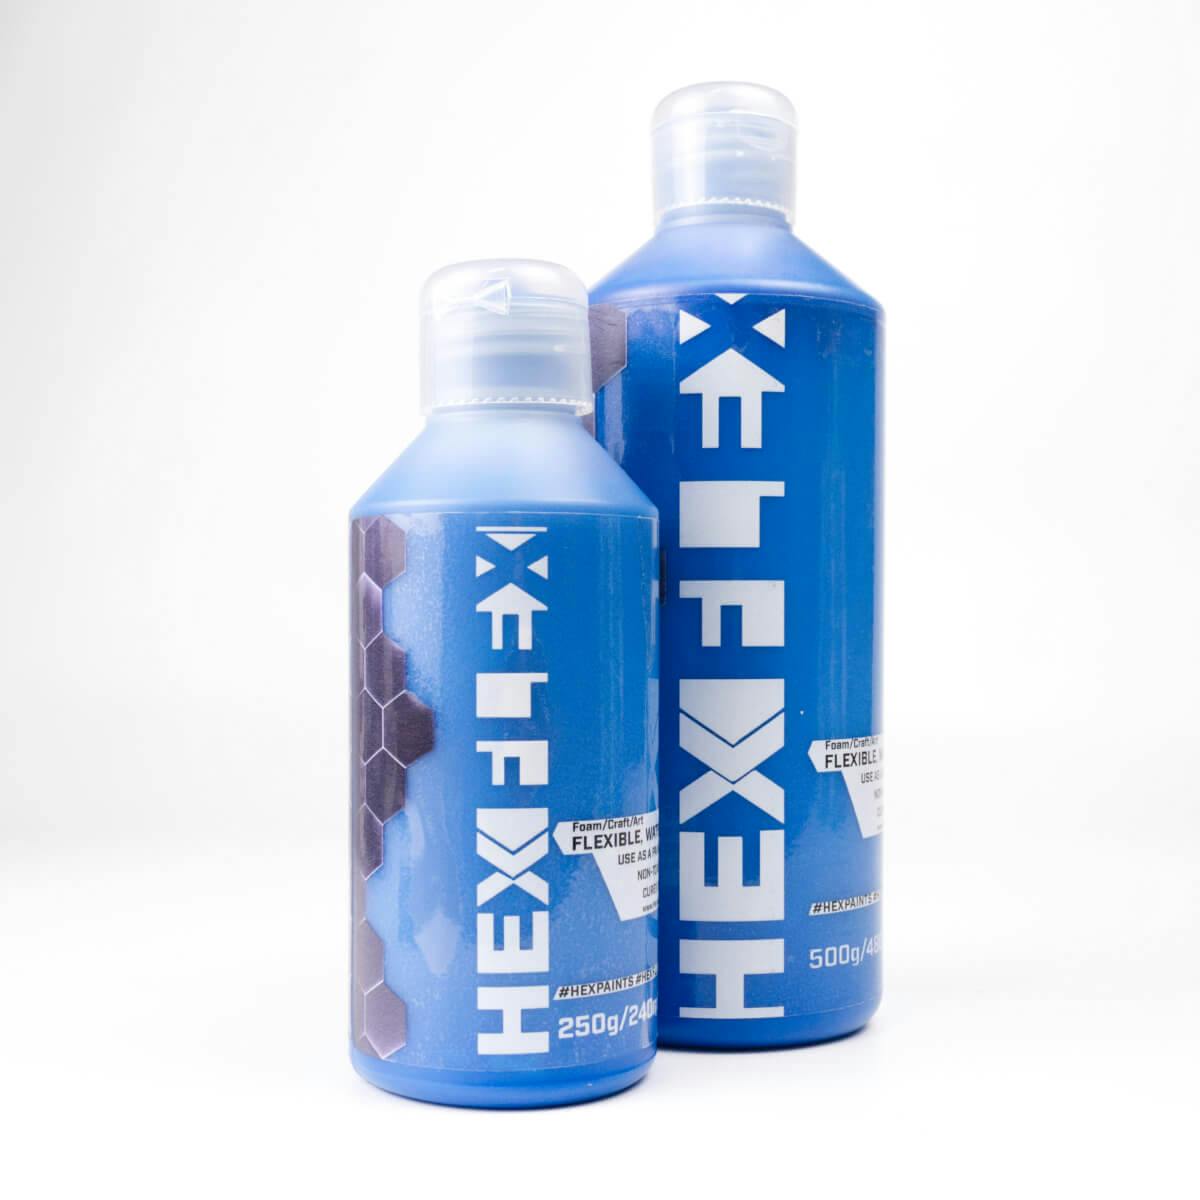 Product HexFlex Primer in blue